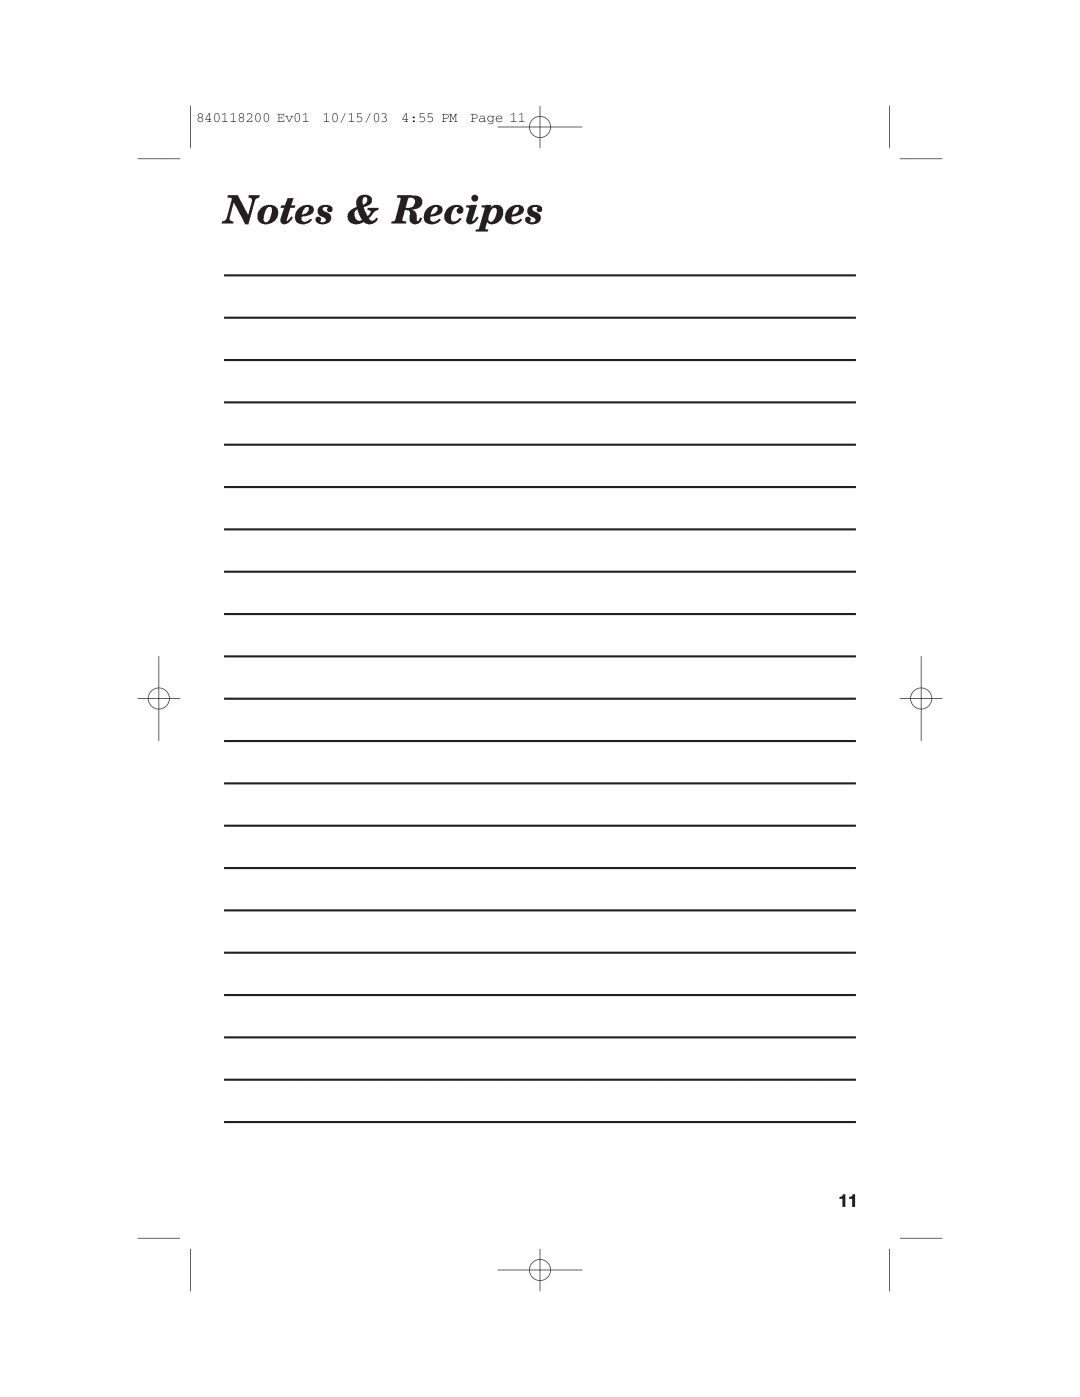 Hamilton Beach 67900 manual Notes & Recipes, 840118200 Ev01 10/15/03 4 55 PM Page 